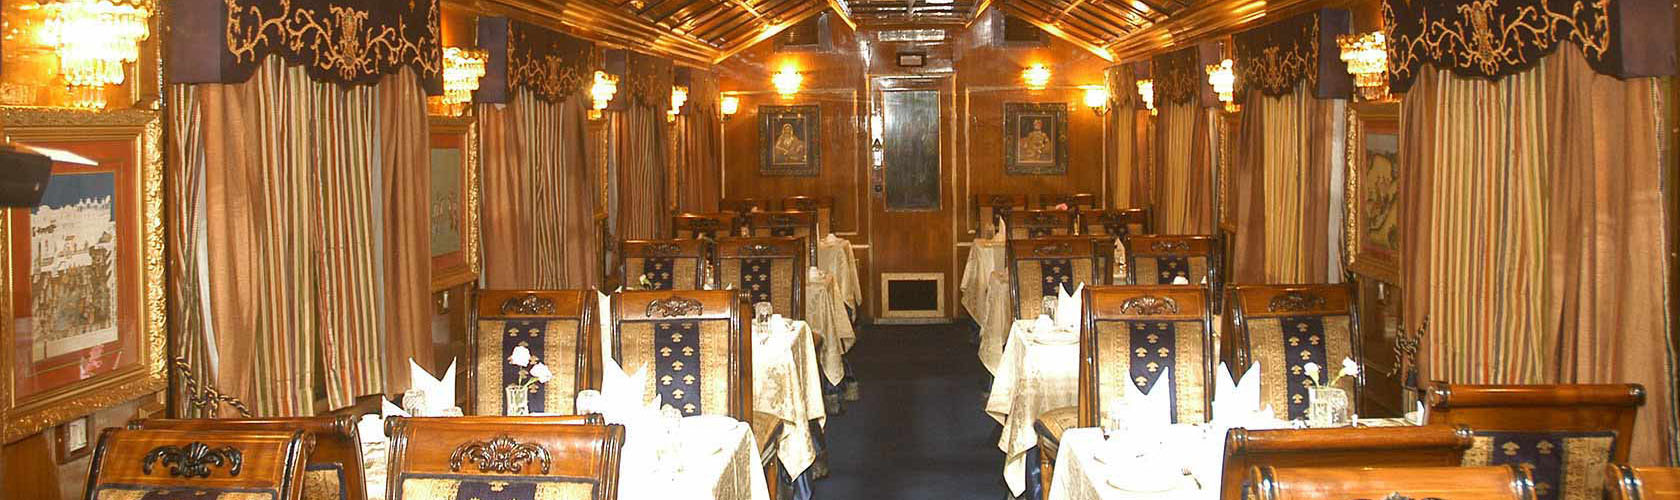 Palace on Wheels Train India 